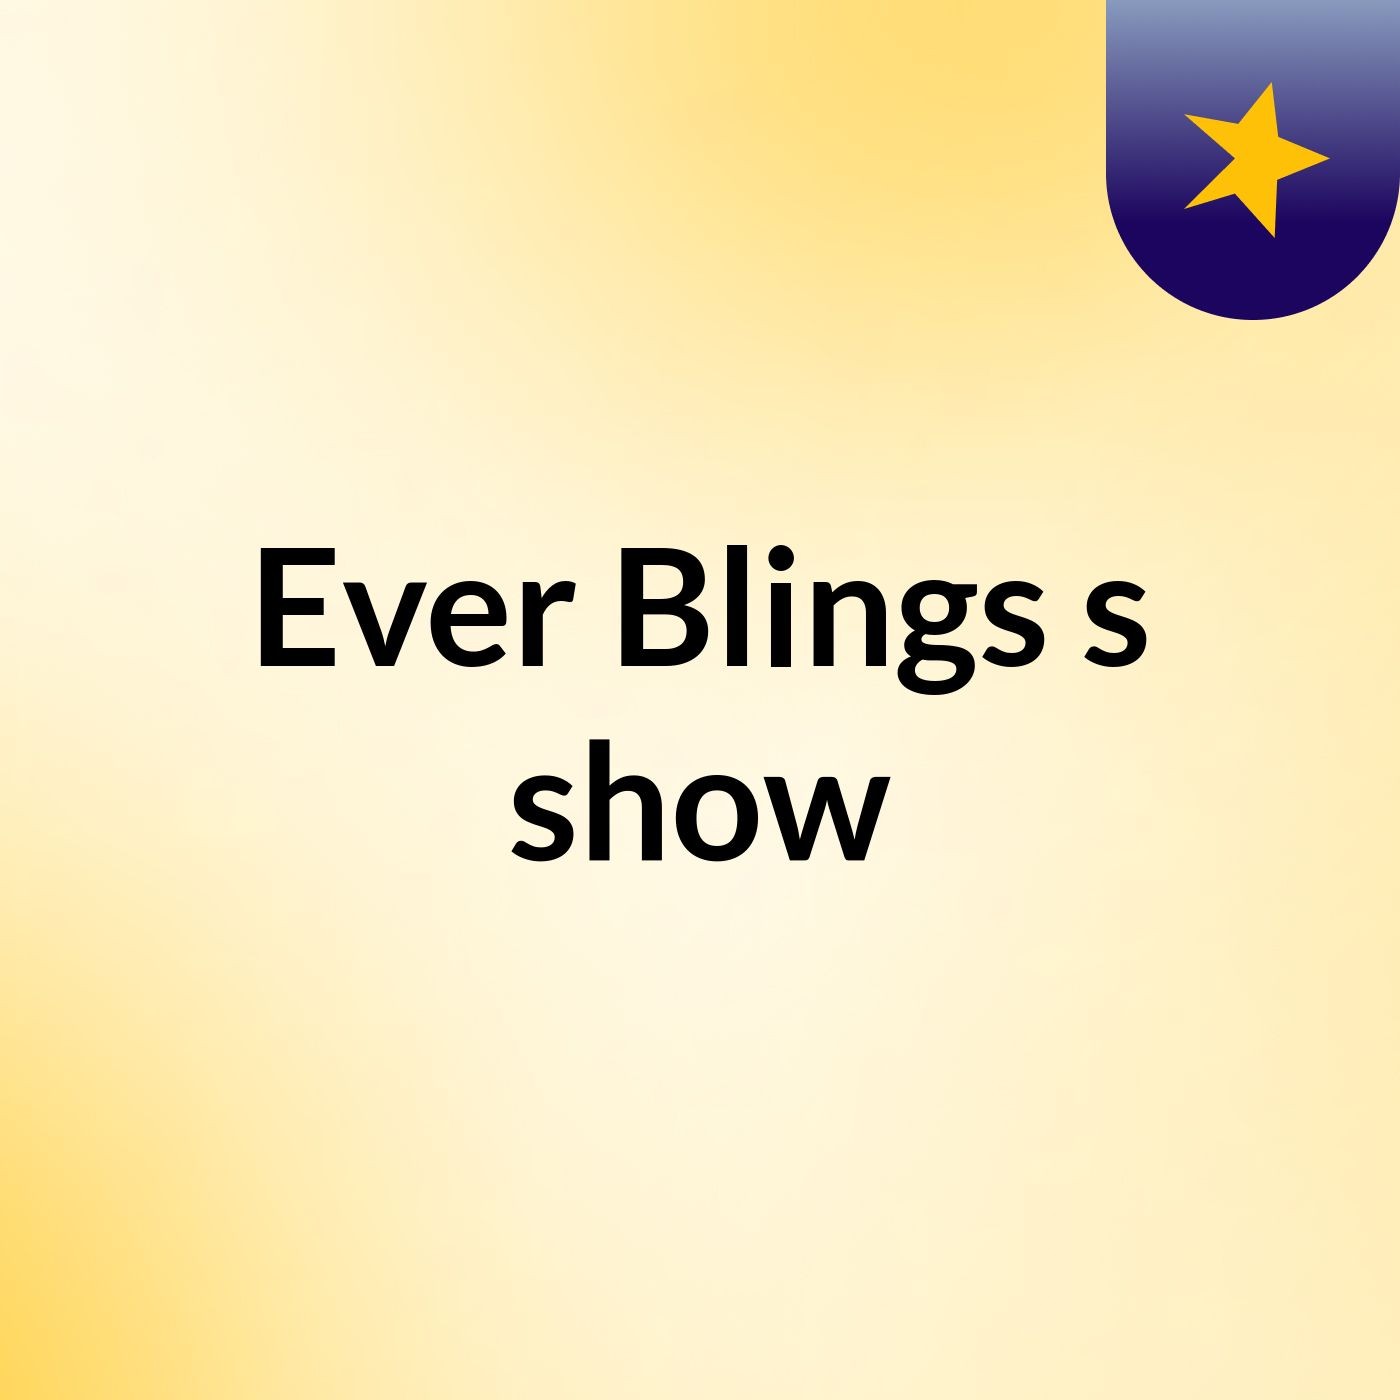 Ever Blings's show